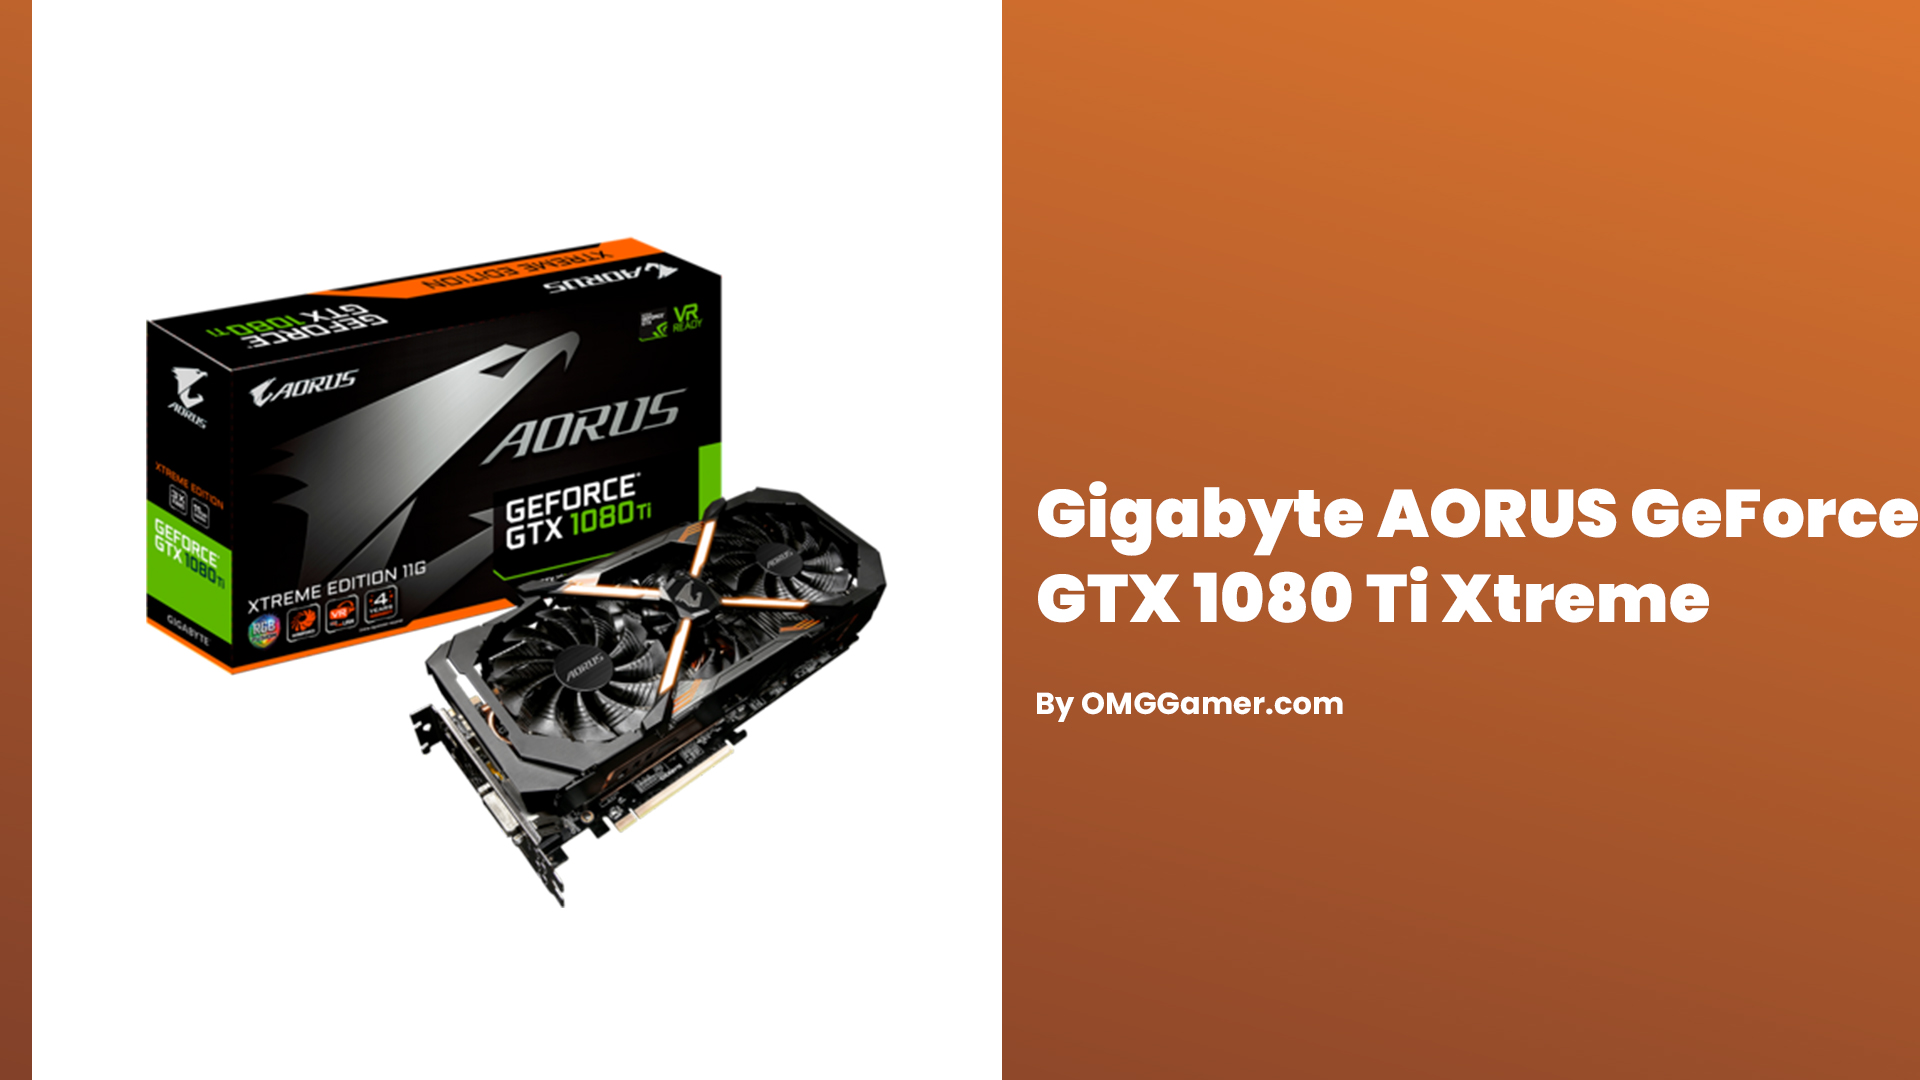 Gigabyte AORUS GeForce GTX 1080 Ti Xtreme: Cheapest 4K Graphics Cards